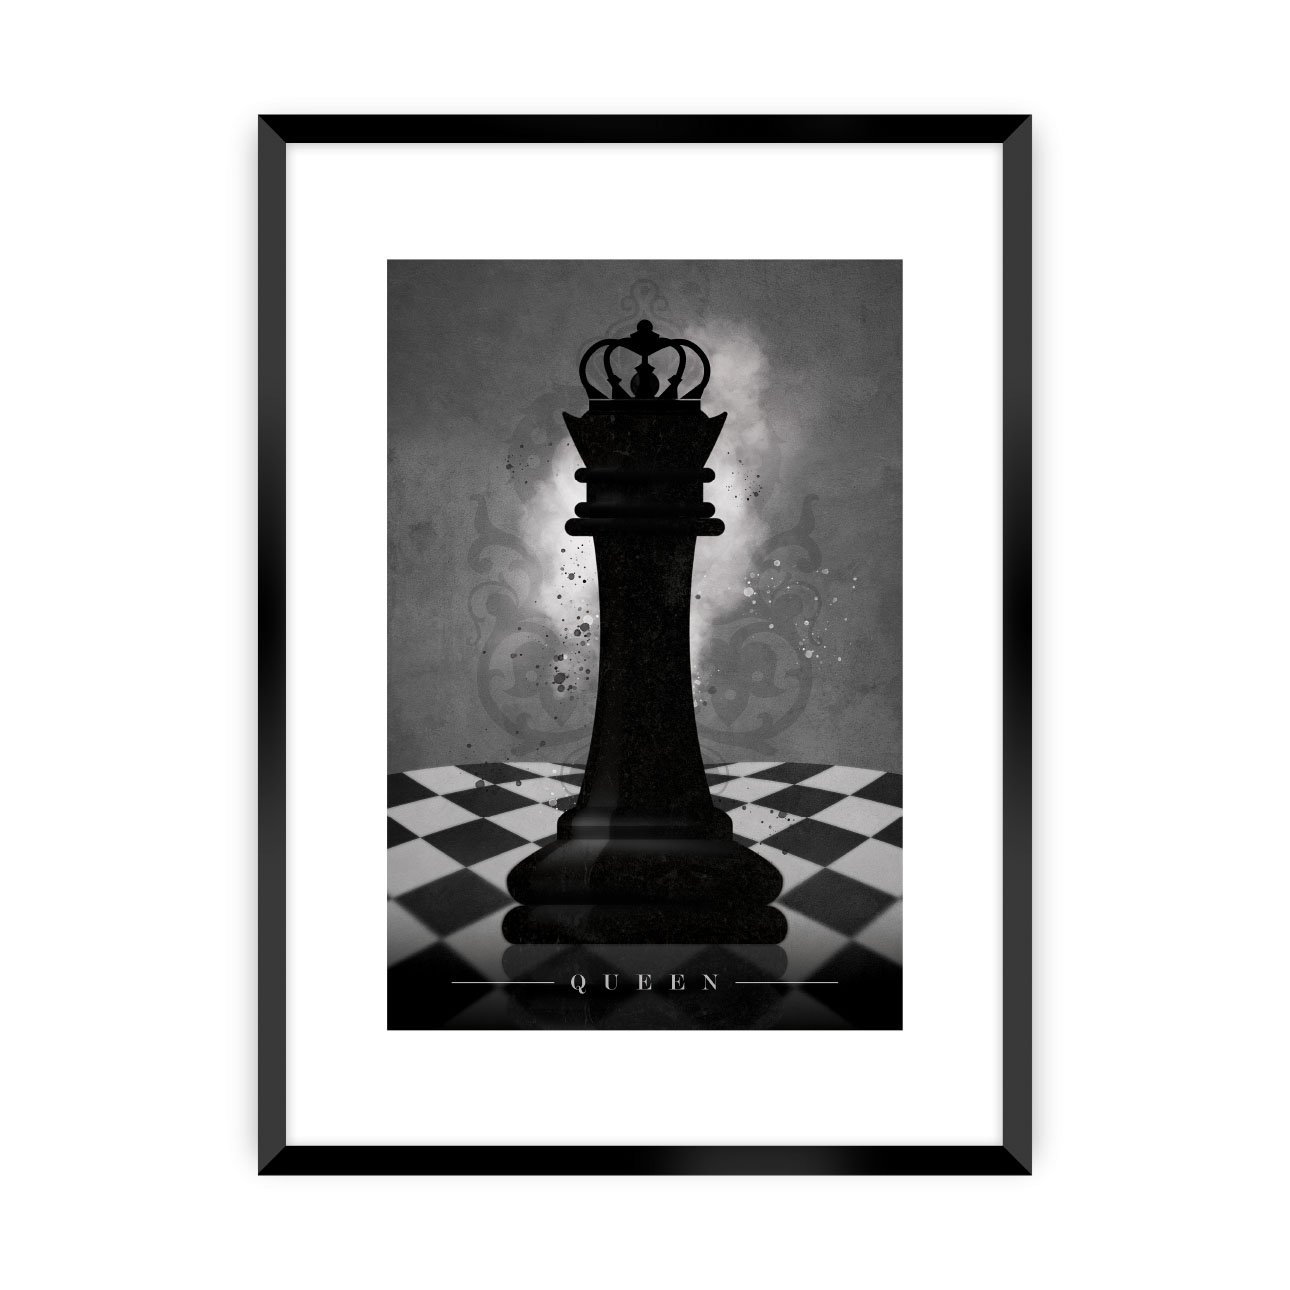 Plakát Chess II